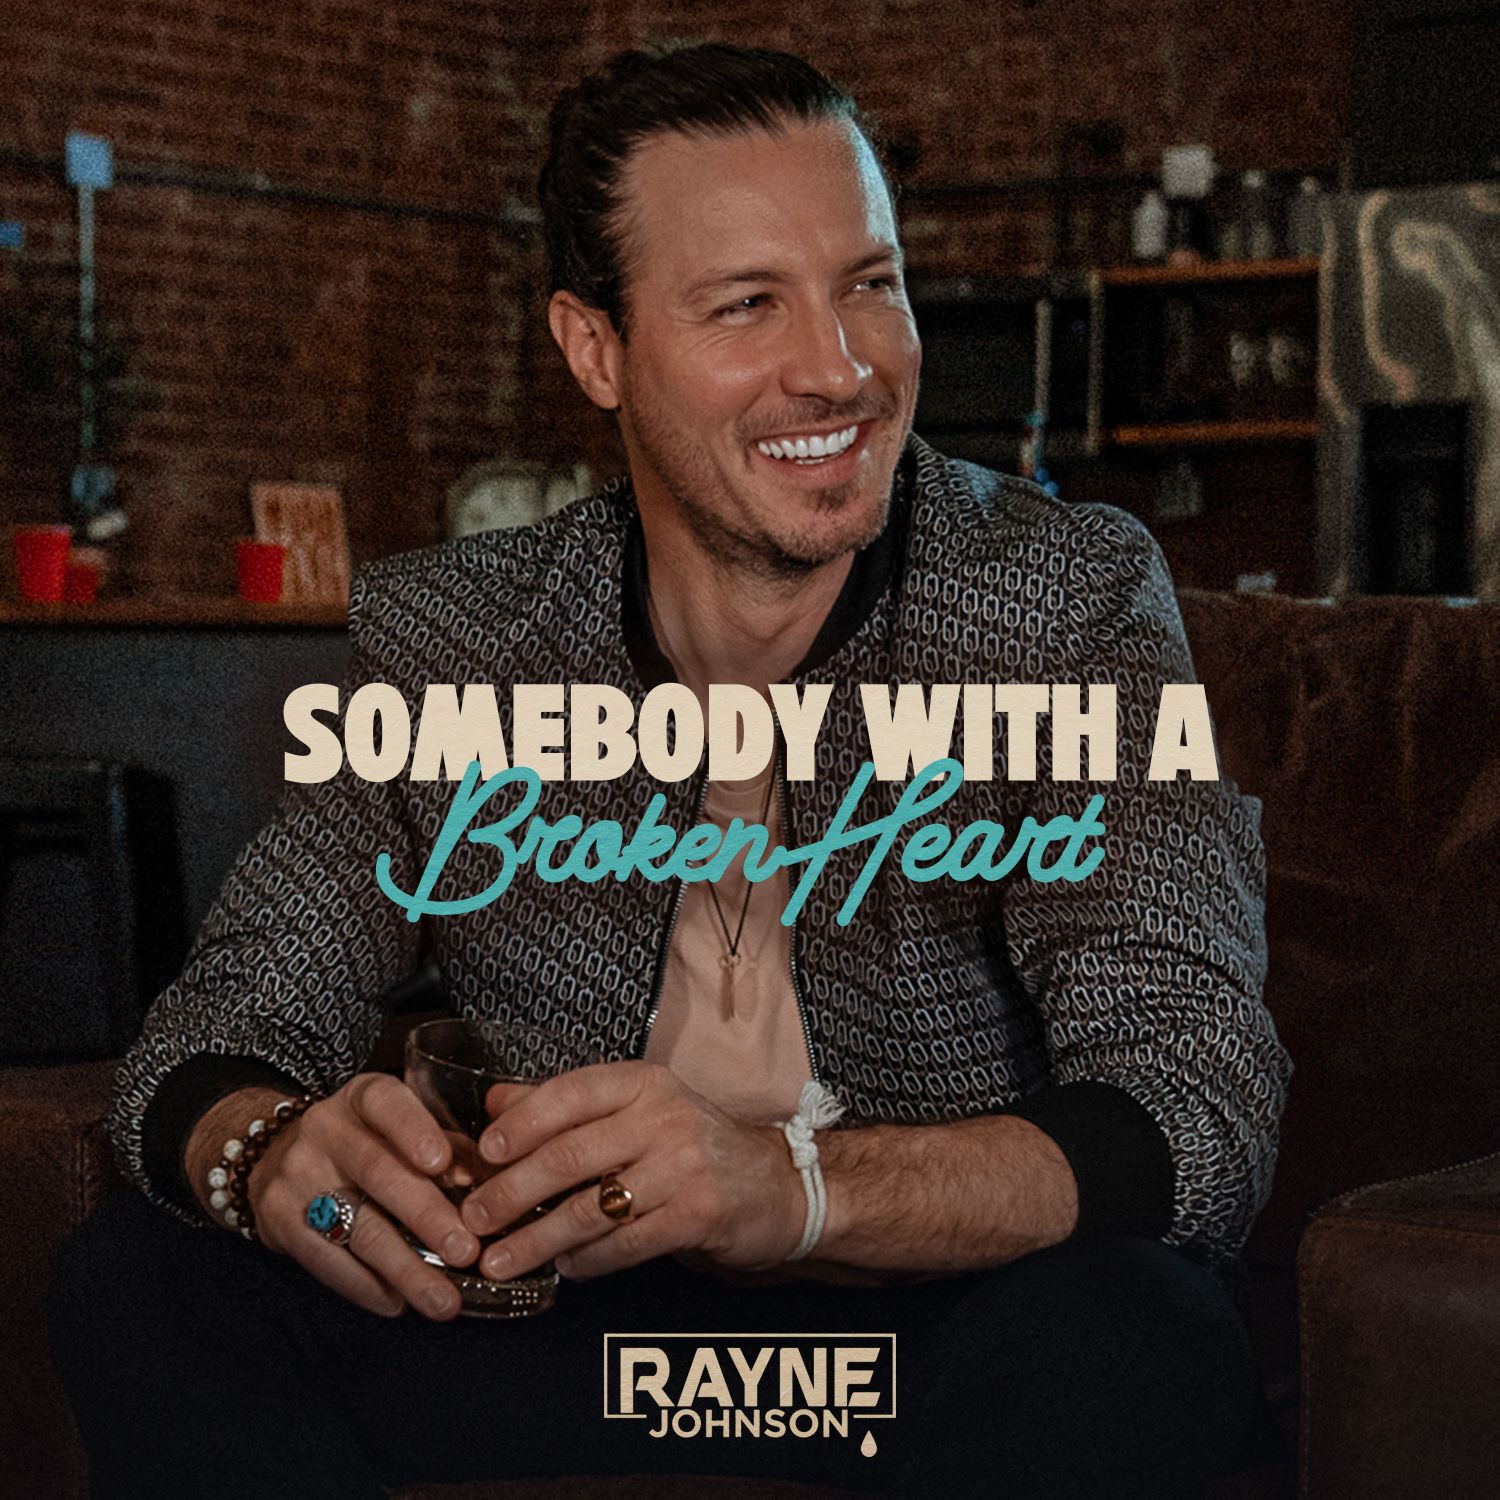 Rayne Johnson - "Somebody With A Broken Heart" 